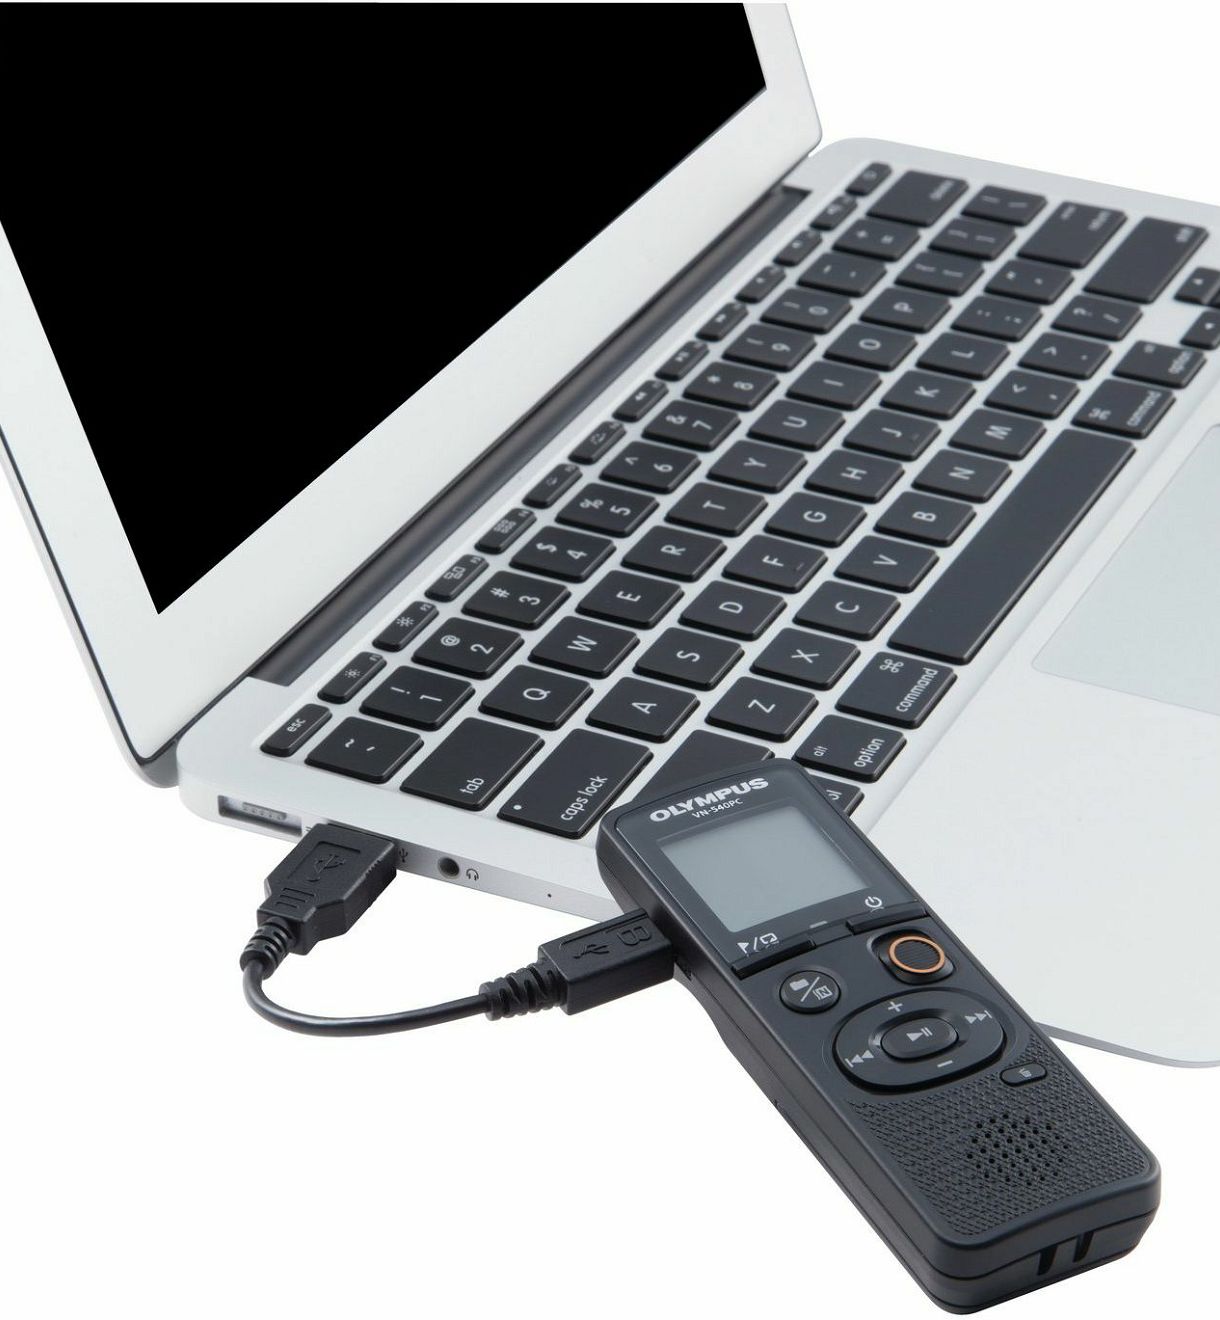 Olympus VN-540PC with CS131 soft case Digital Note Taker with PC Connection prijenosni snimač zvuka (V405291BE030)